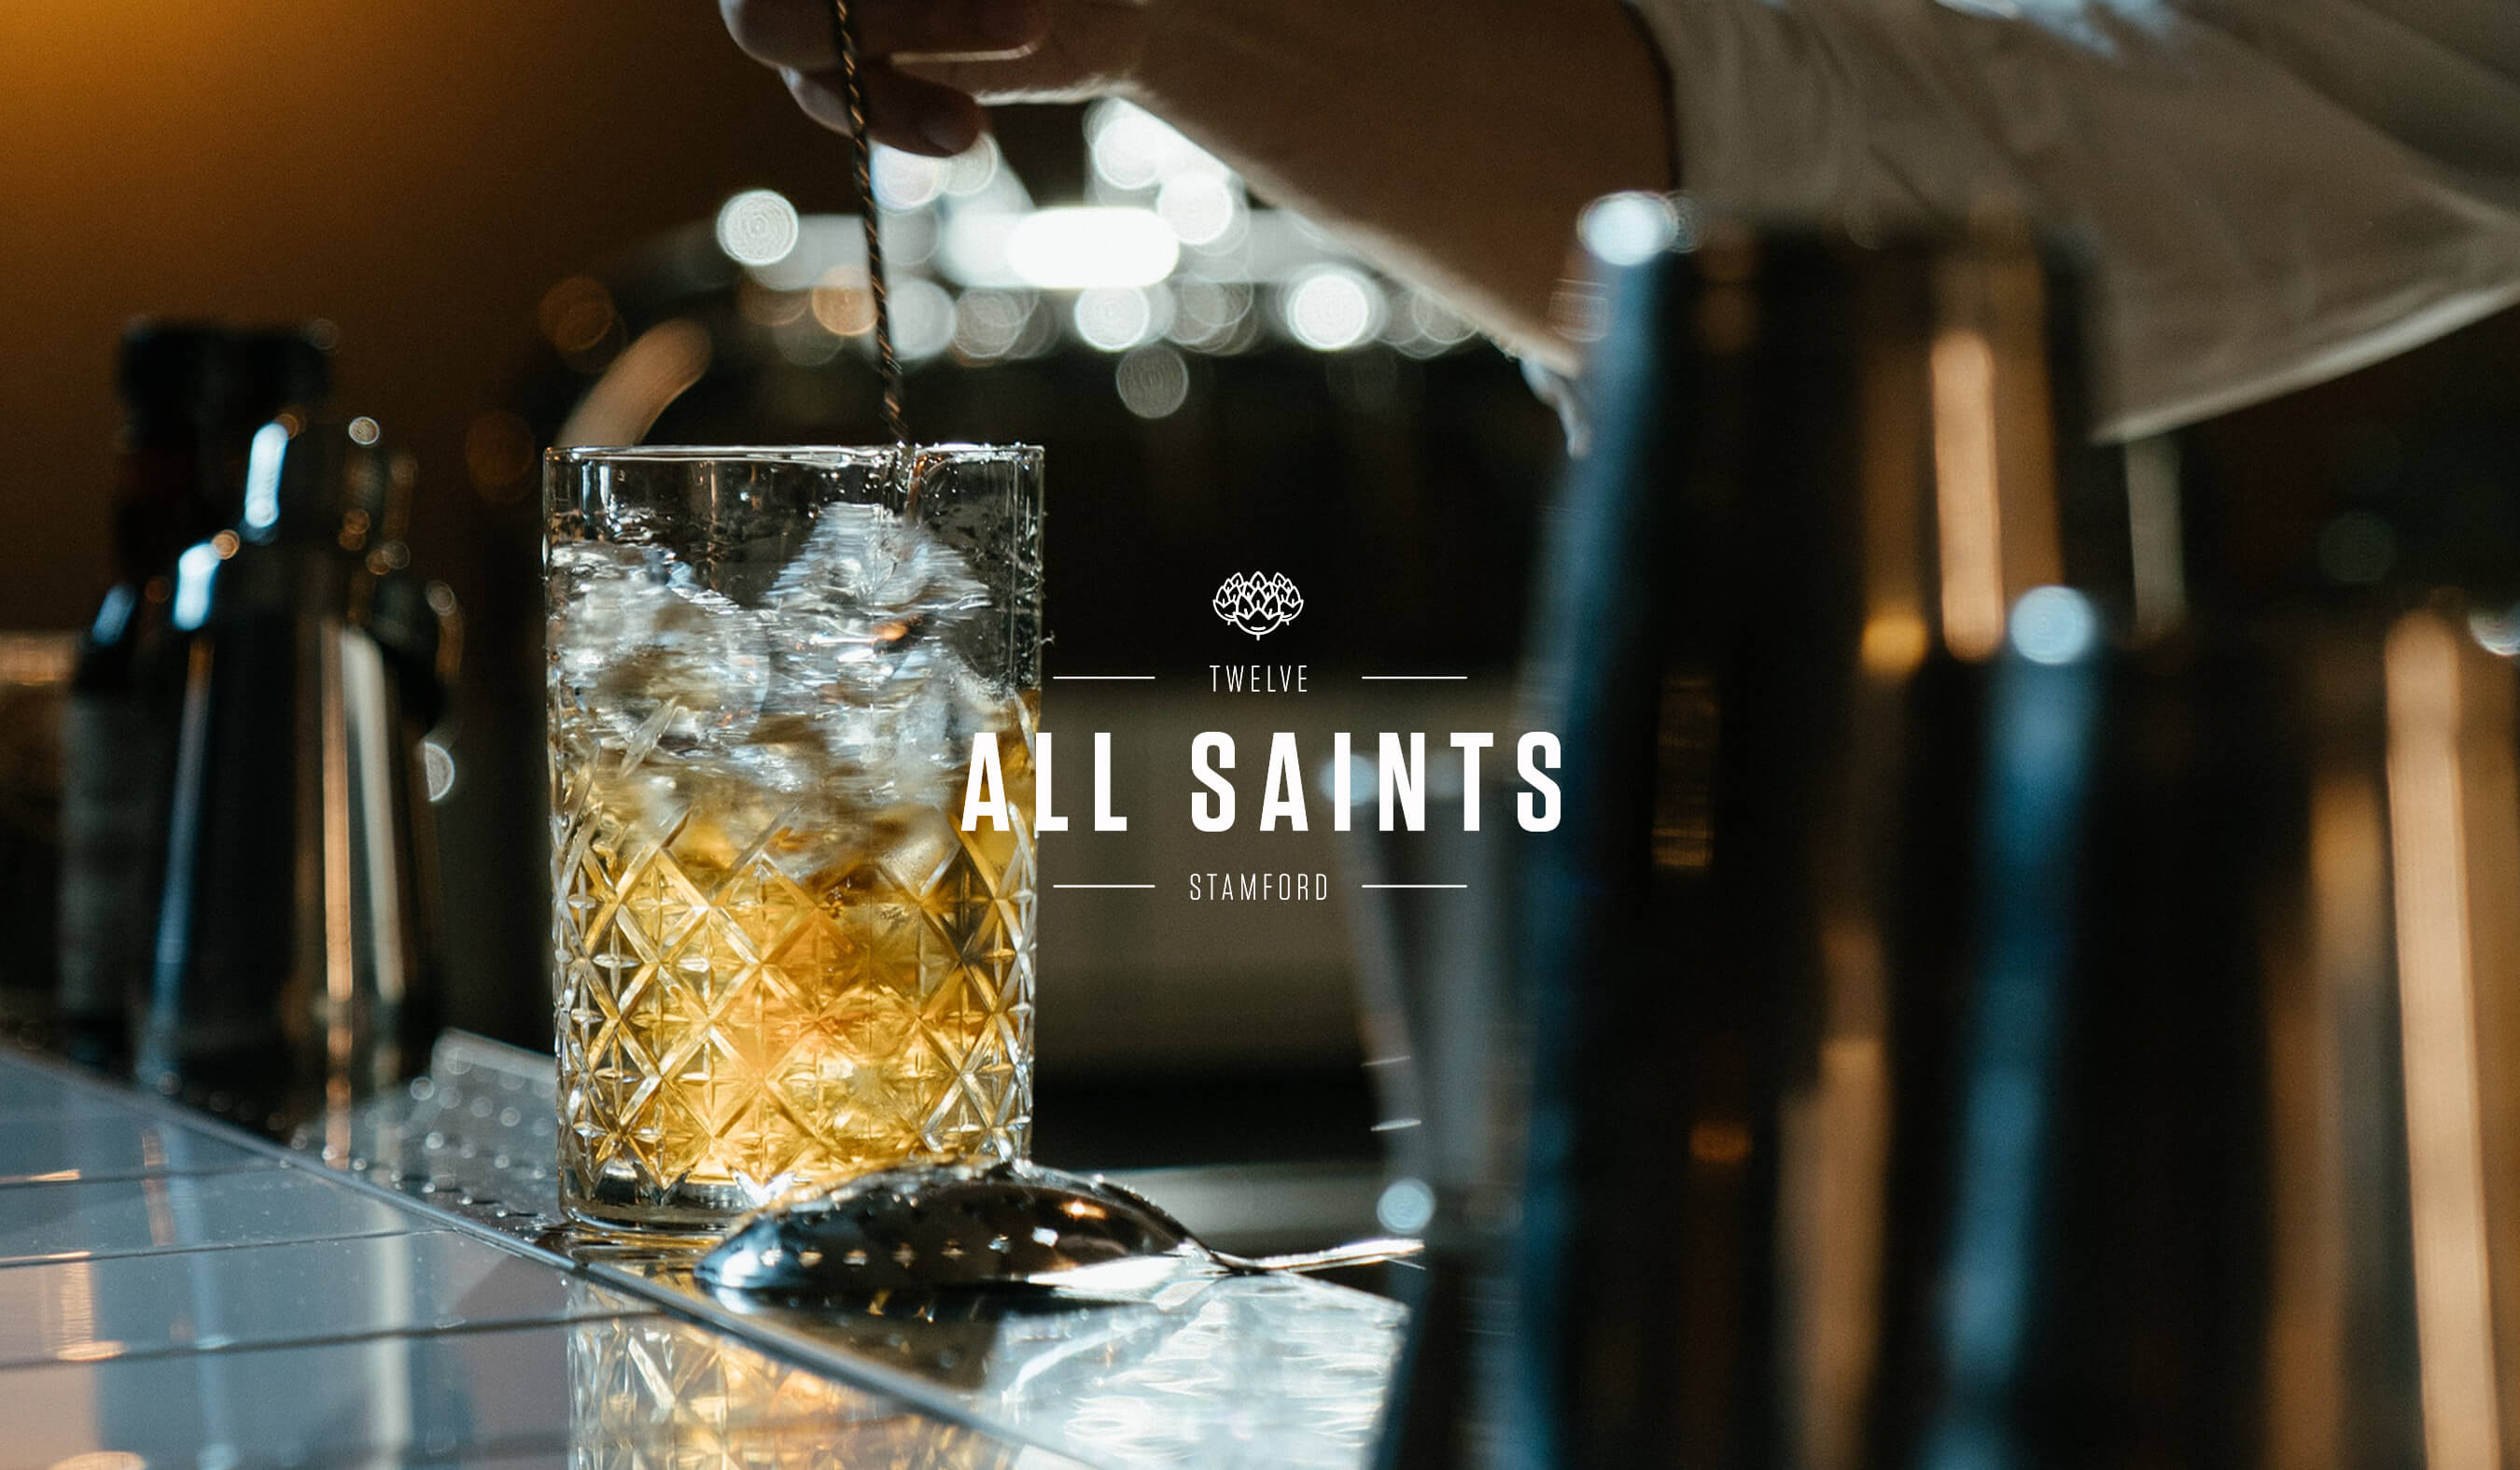 Twelve All saints sub brand logo